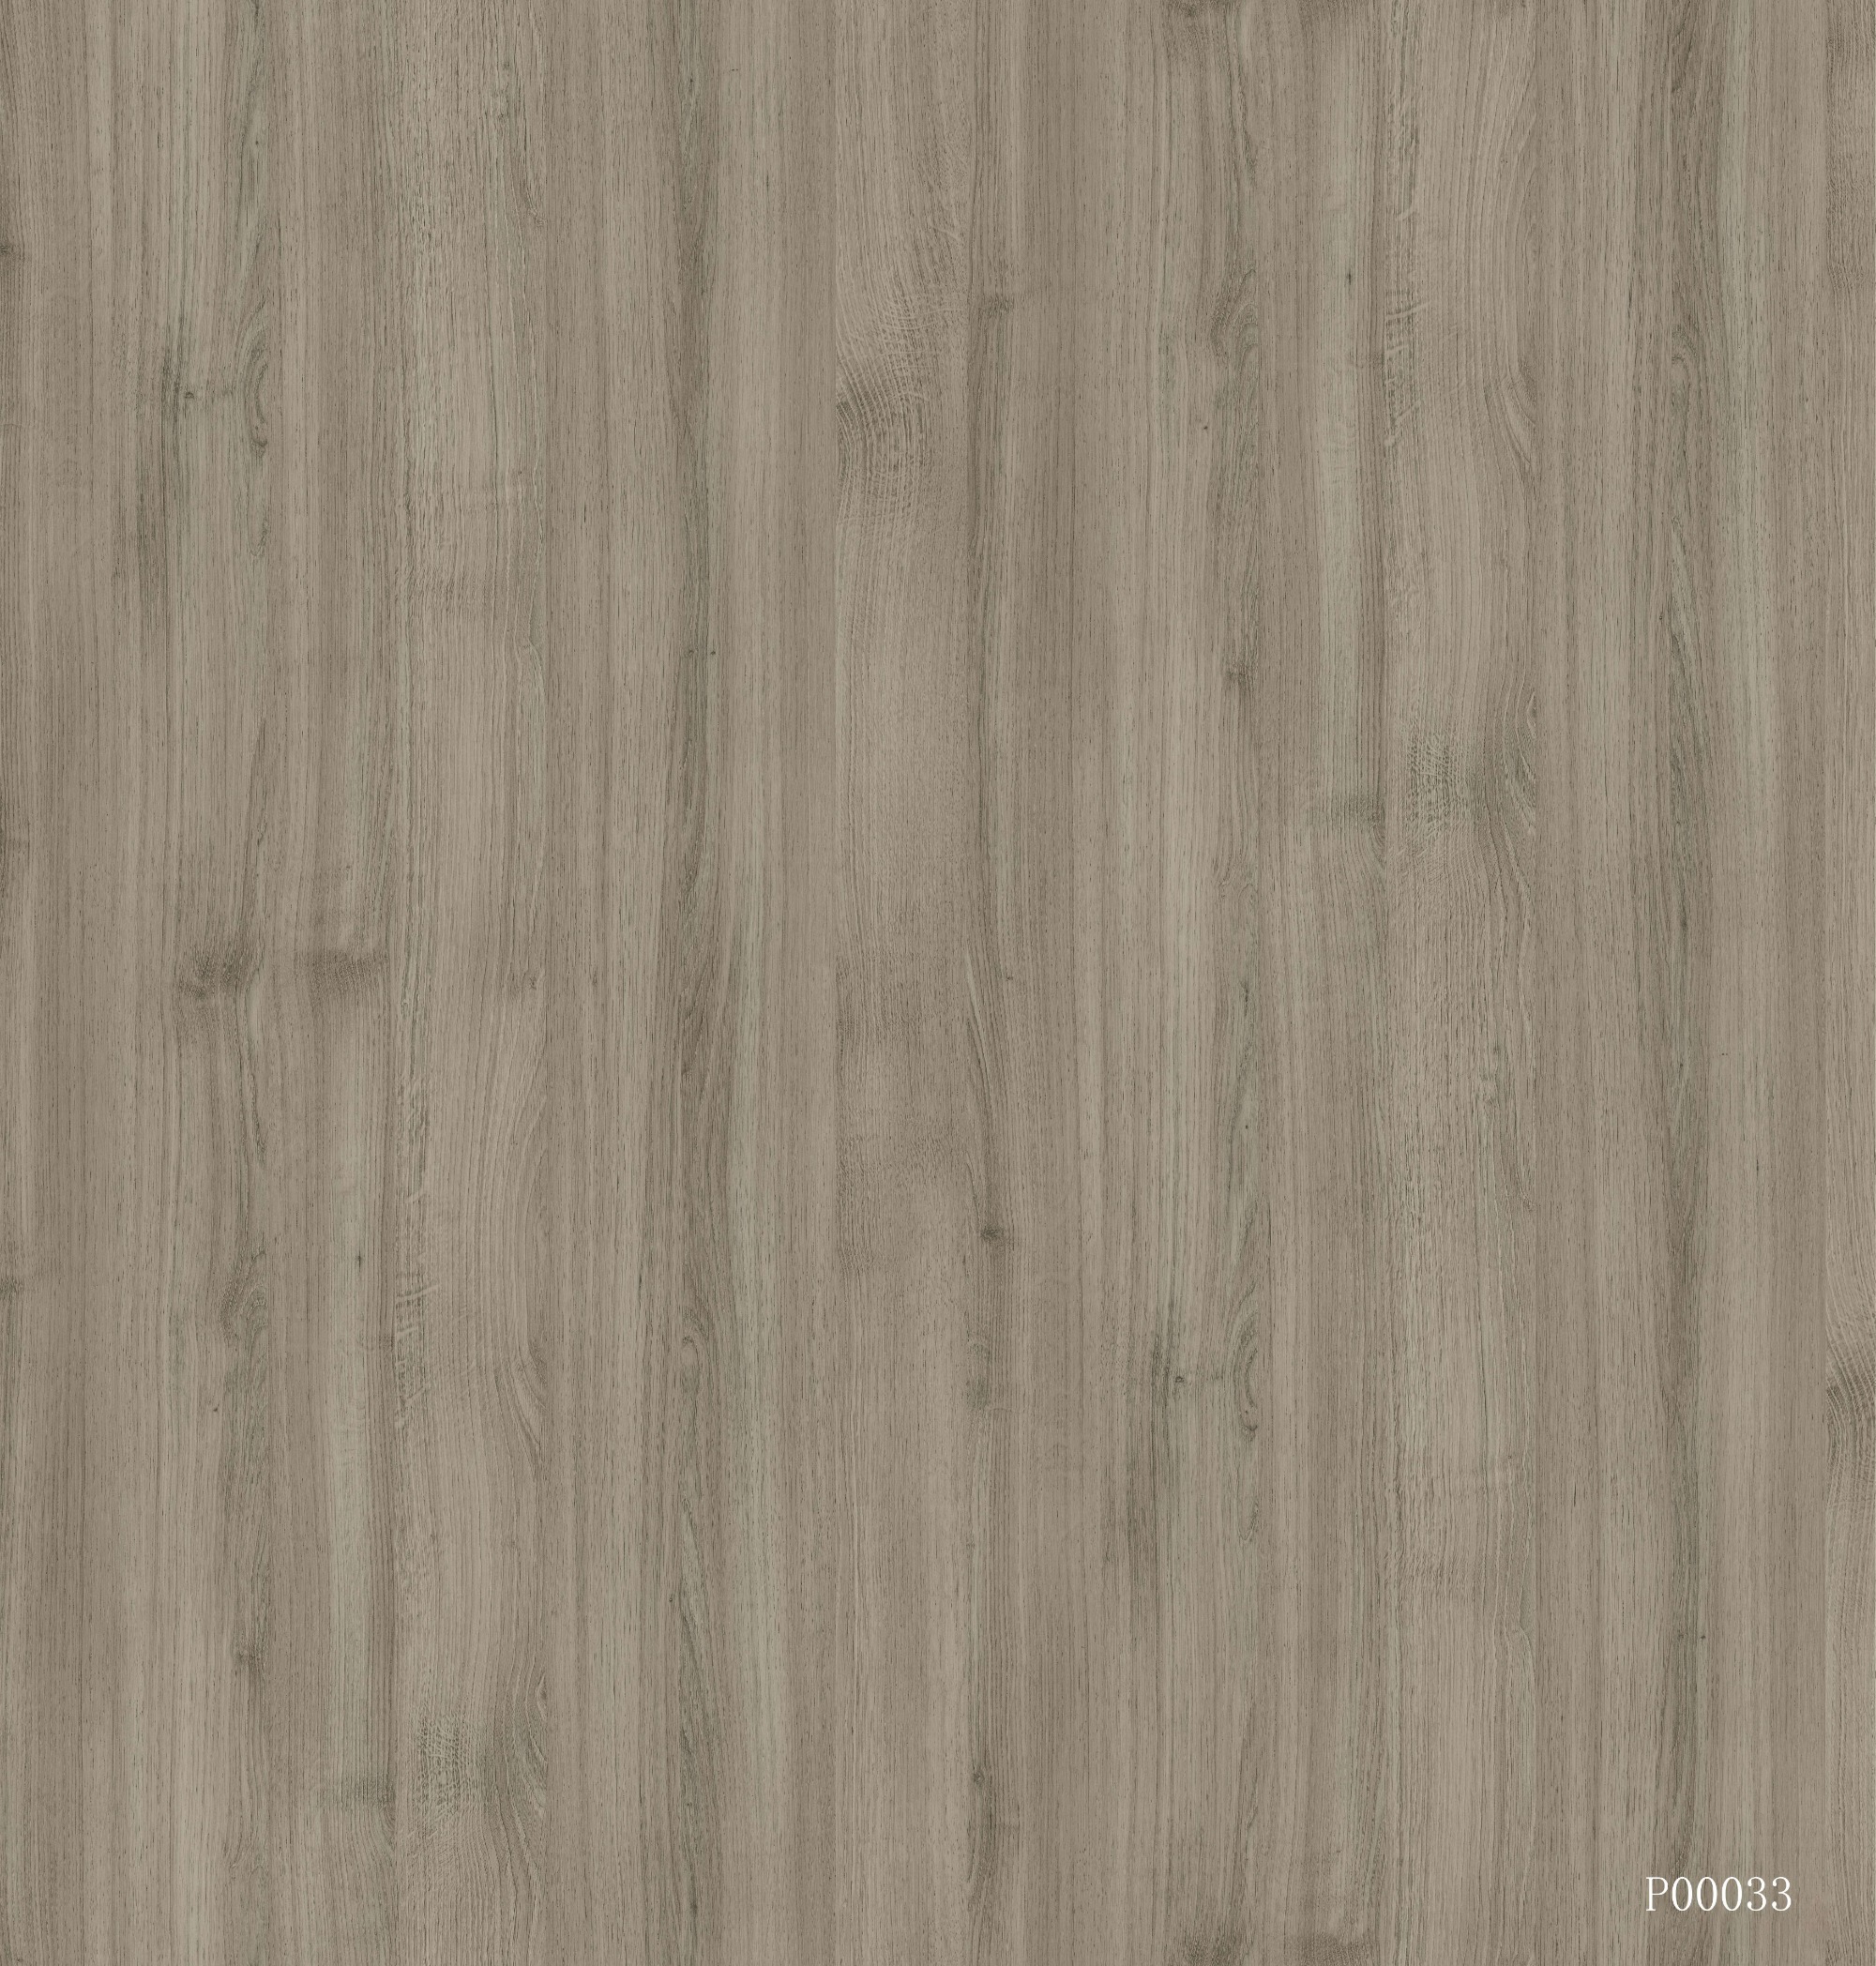 P00033 Melamine paper with wood grain